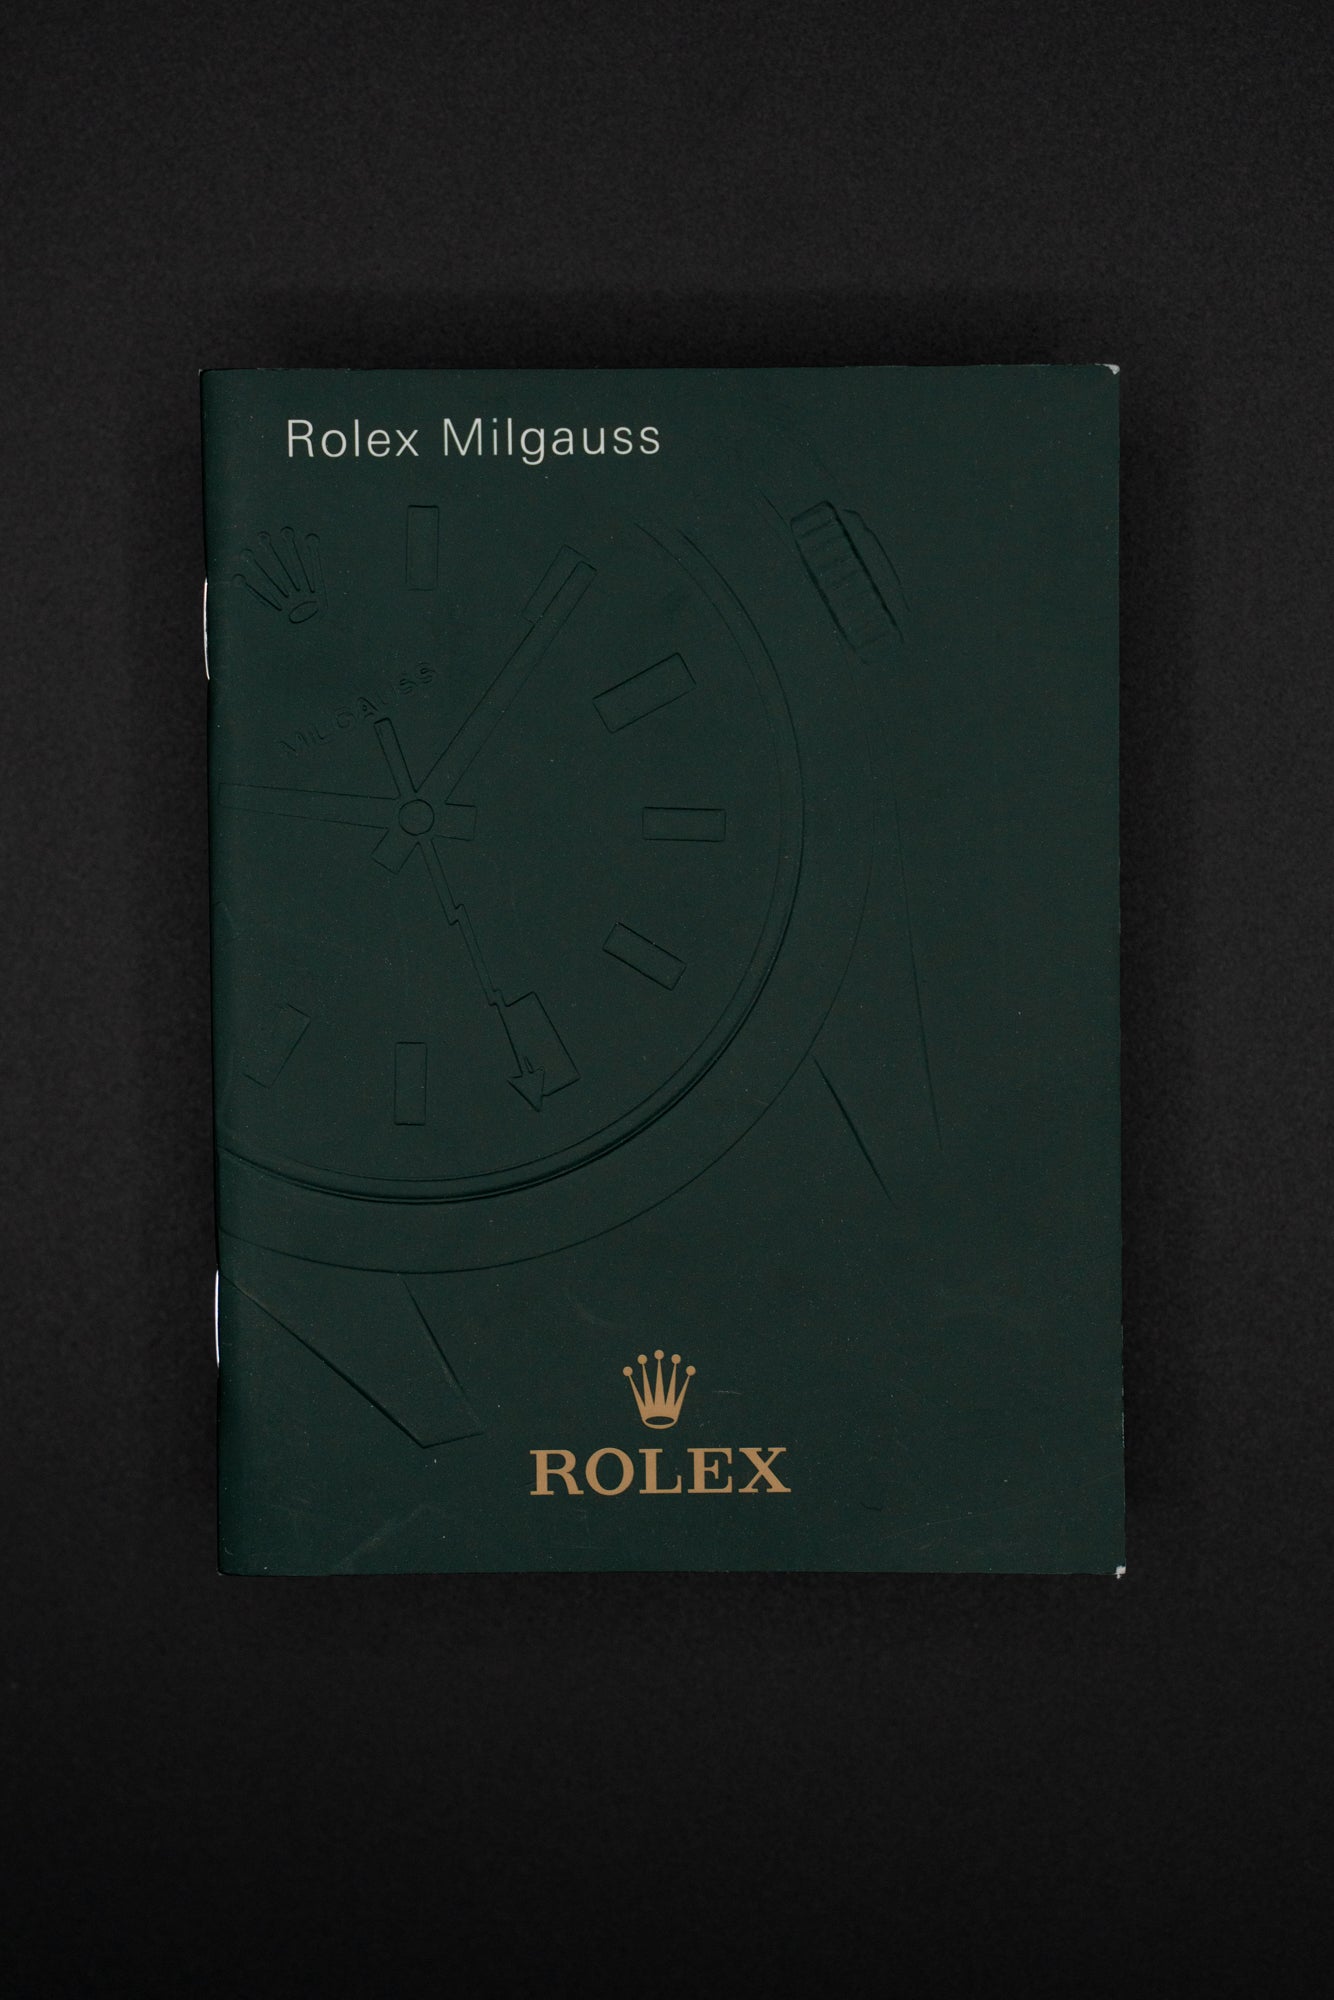 Rolex Milgauss user manual german 2009